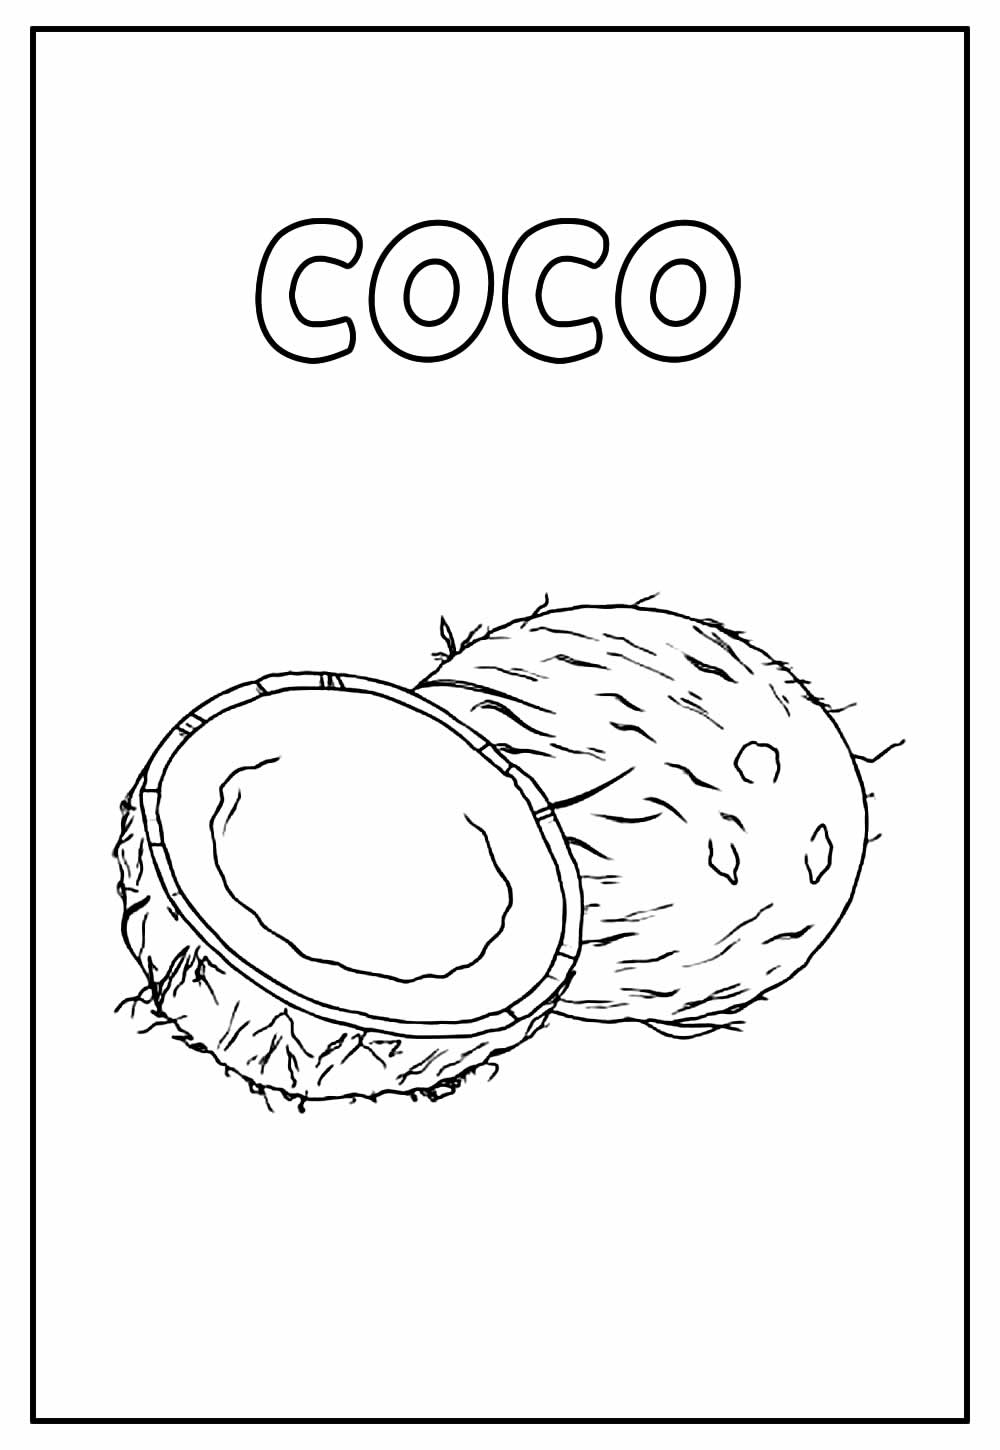 Desenho para pintar de Coco